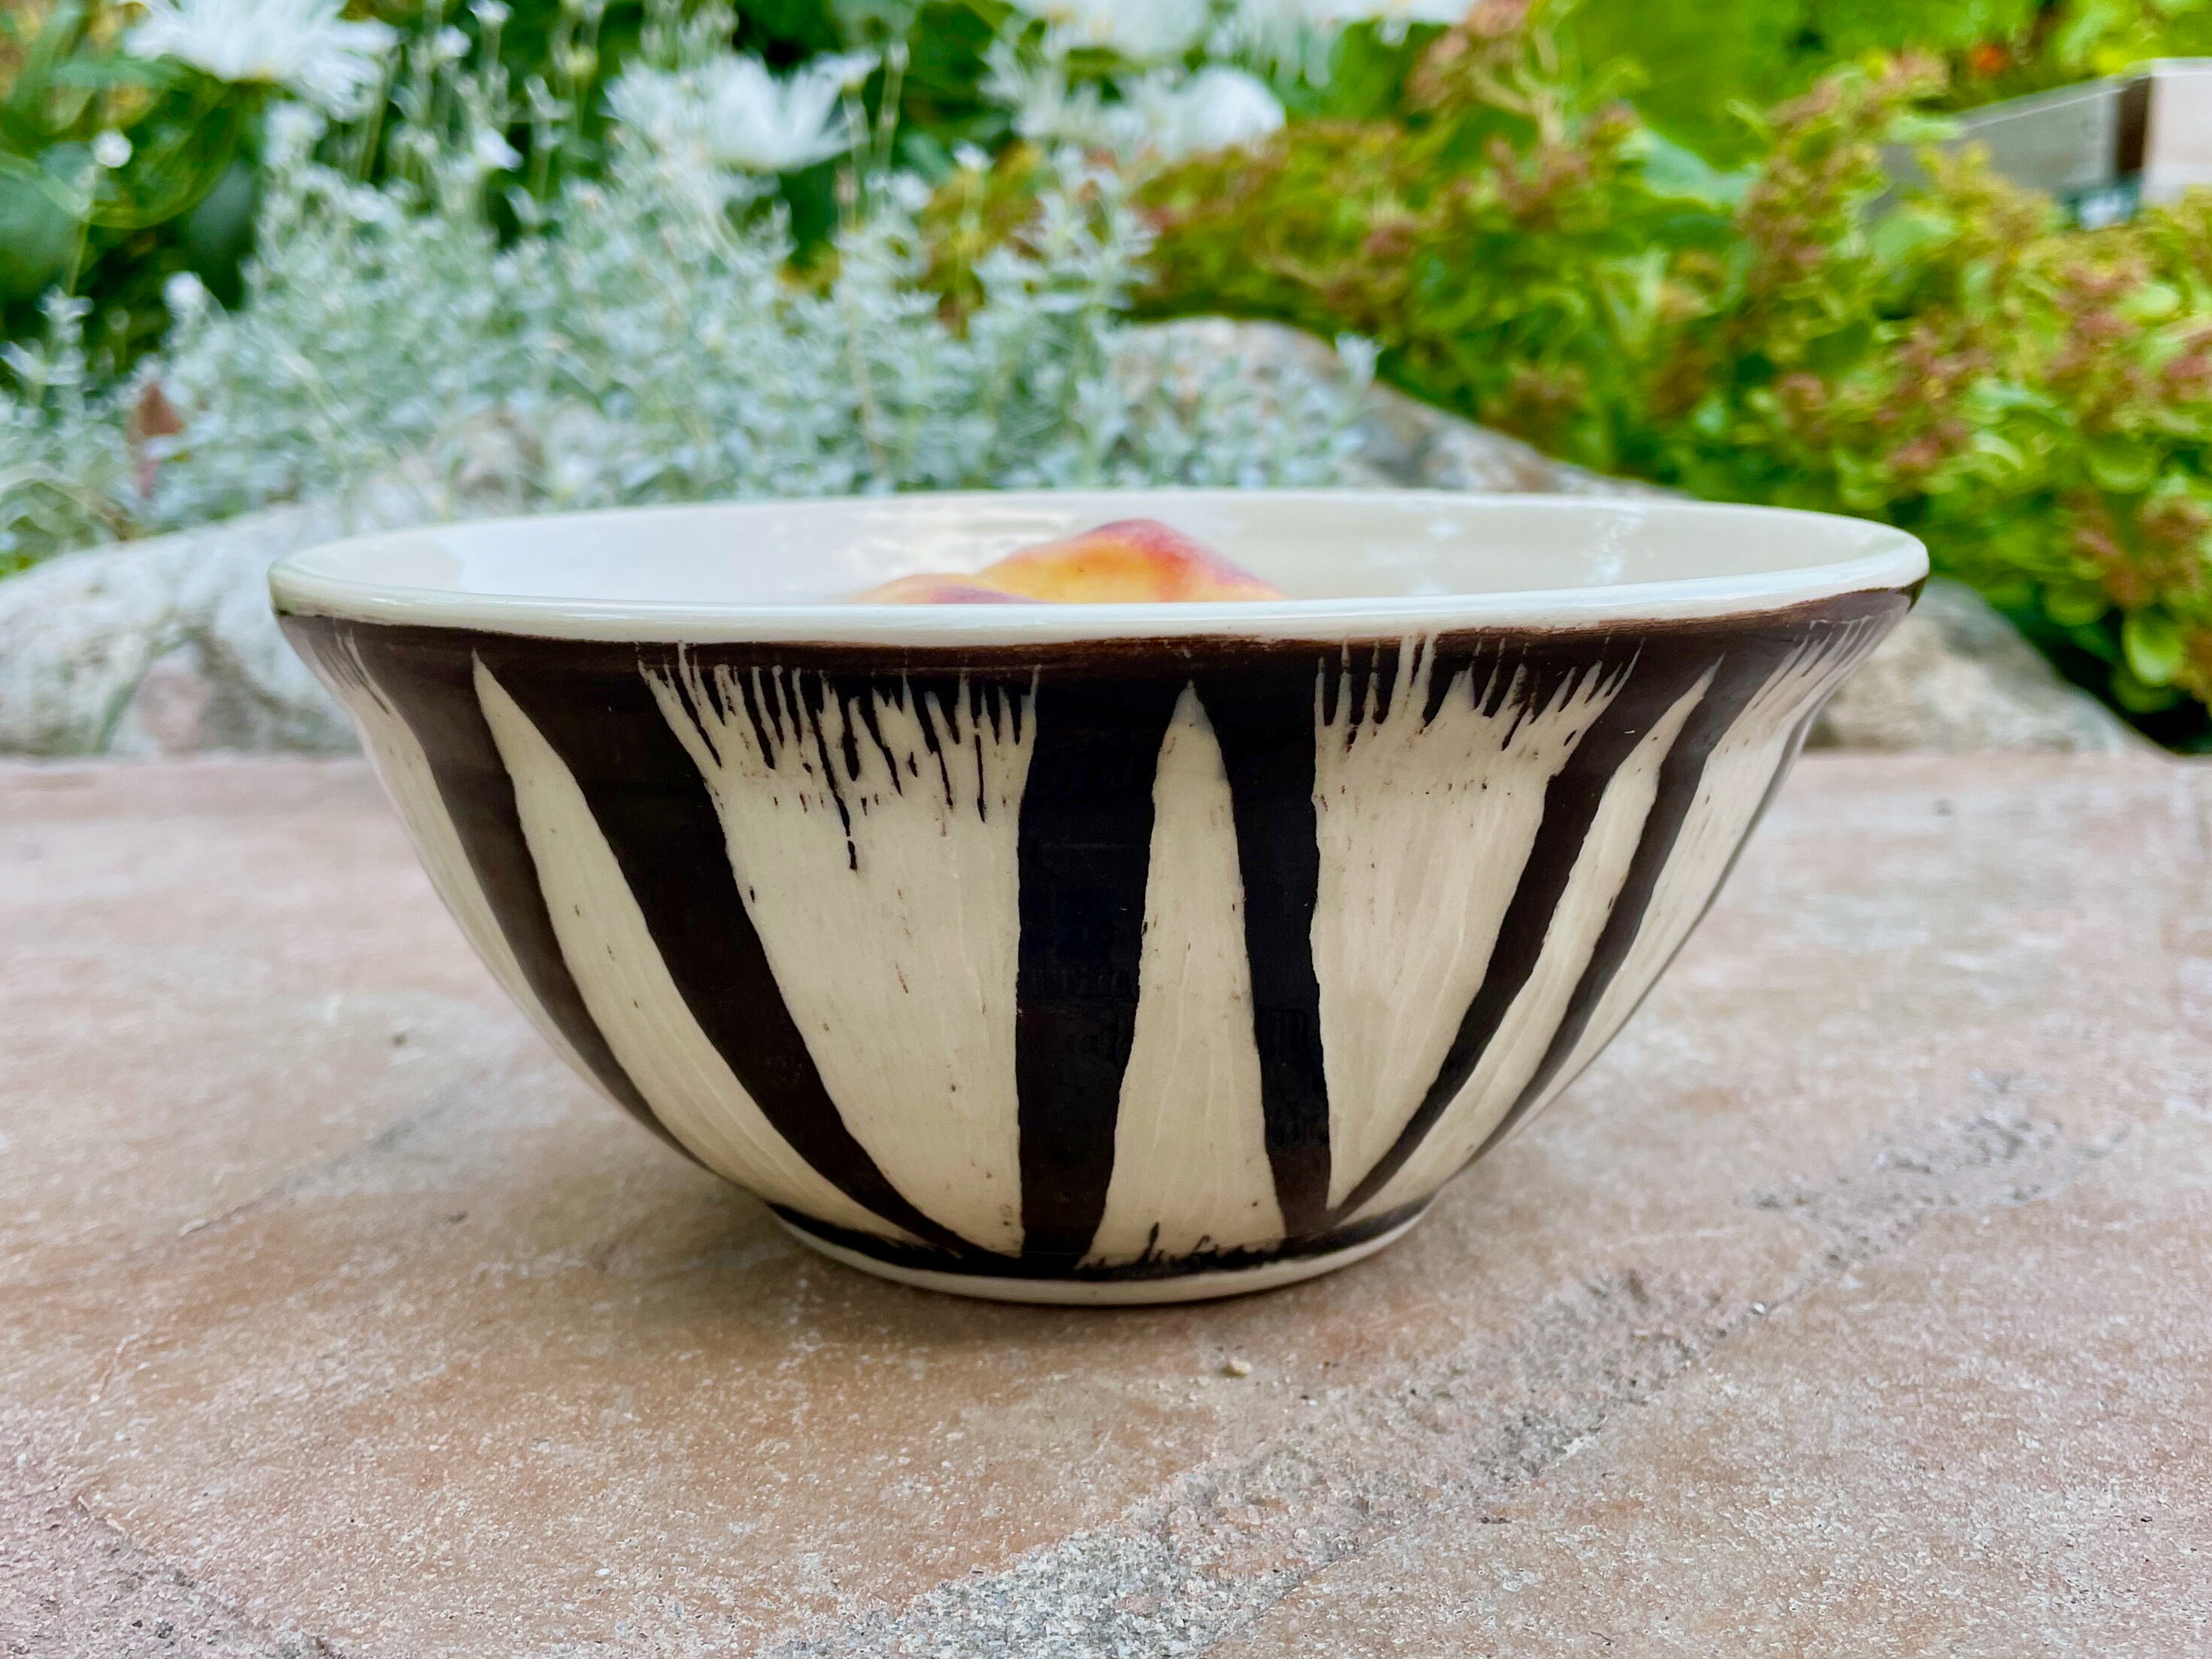 Qeeadeea Large Ceramic Ramen Bowl With Handle, Deep Onion Soup